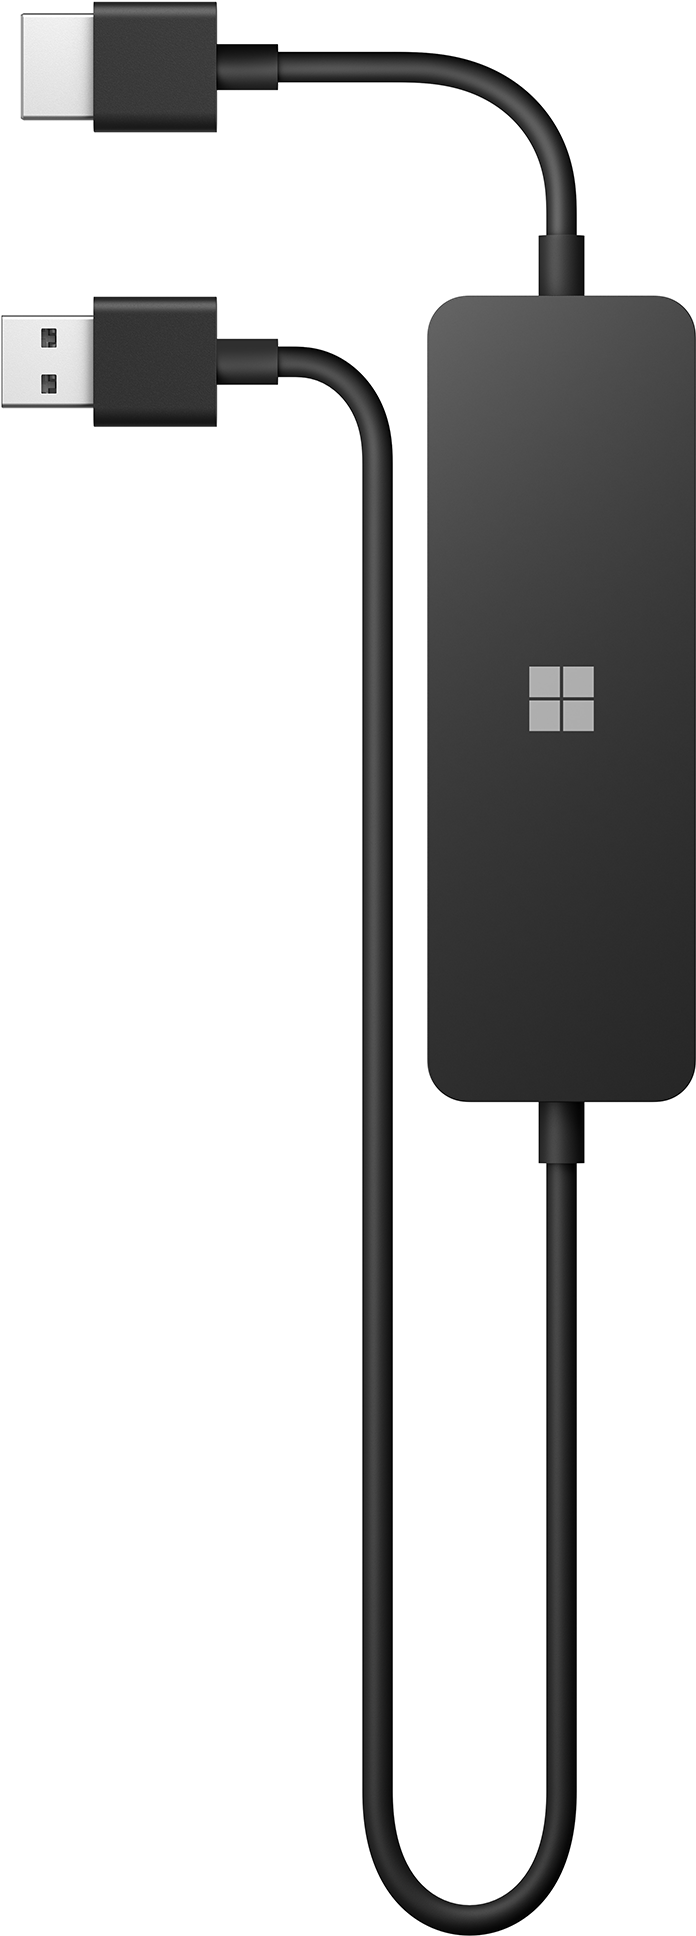 Microsoft ® MS 4K Wireless Display Adapter English,Dutch,French,German Black Austria/Germany 1 License (UTH-00010)